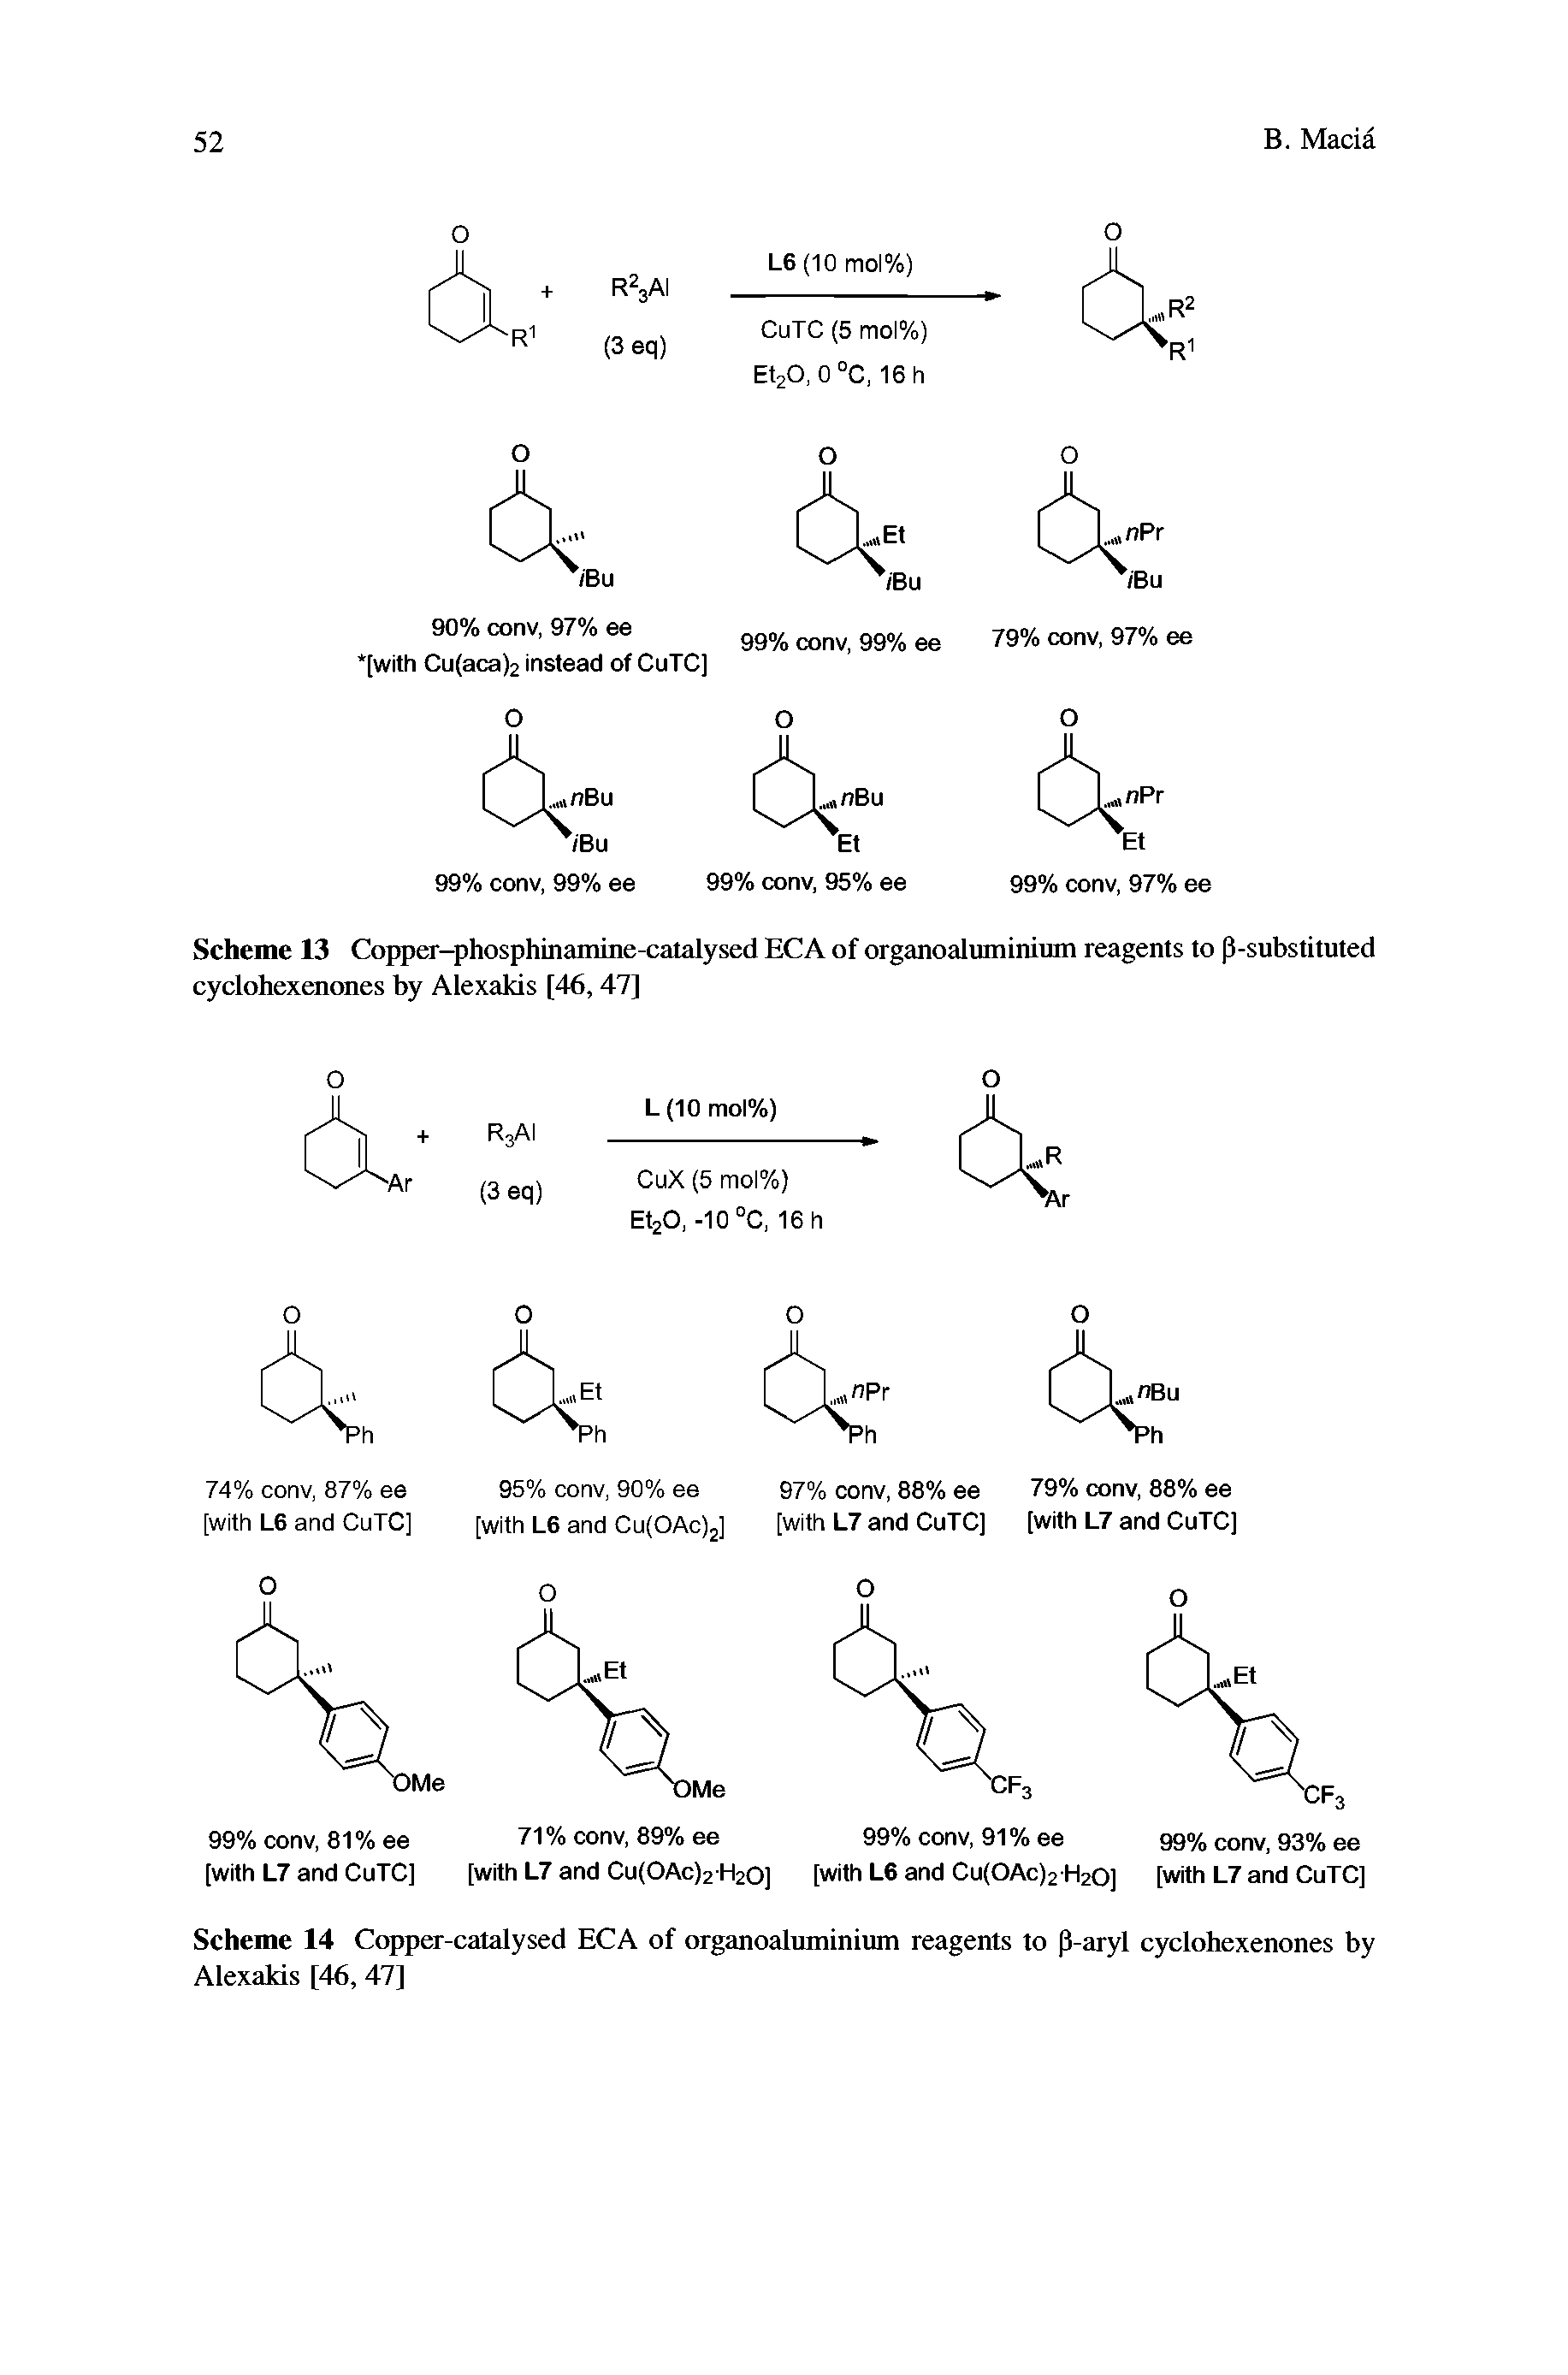 Scheme 13 Copper-phosphinamine-calalysed ECA of organoaluminium reagents to p-substituted cyclohexenones by Alexakis [46,47]...